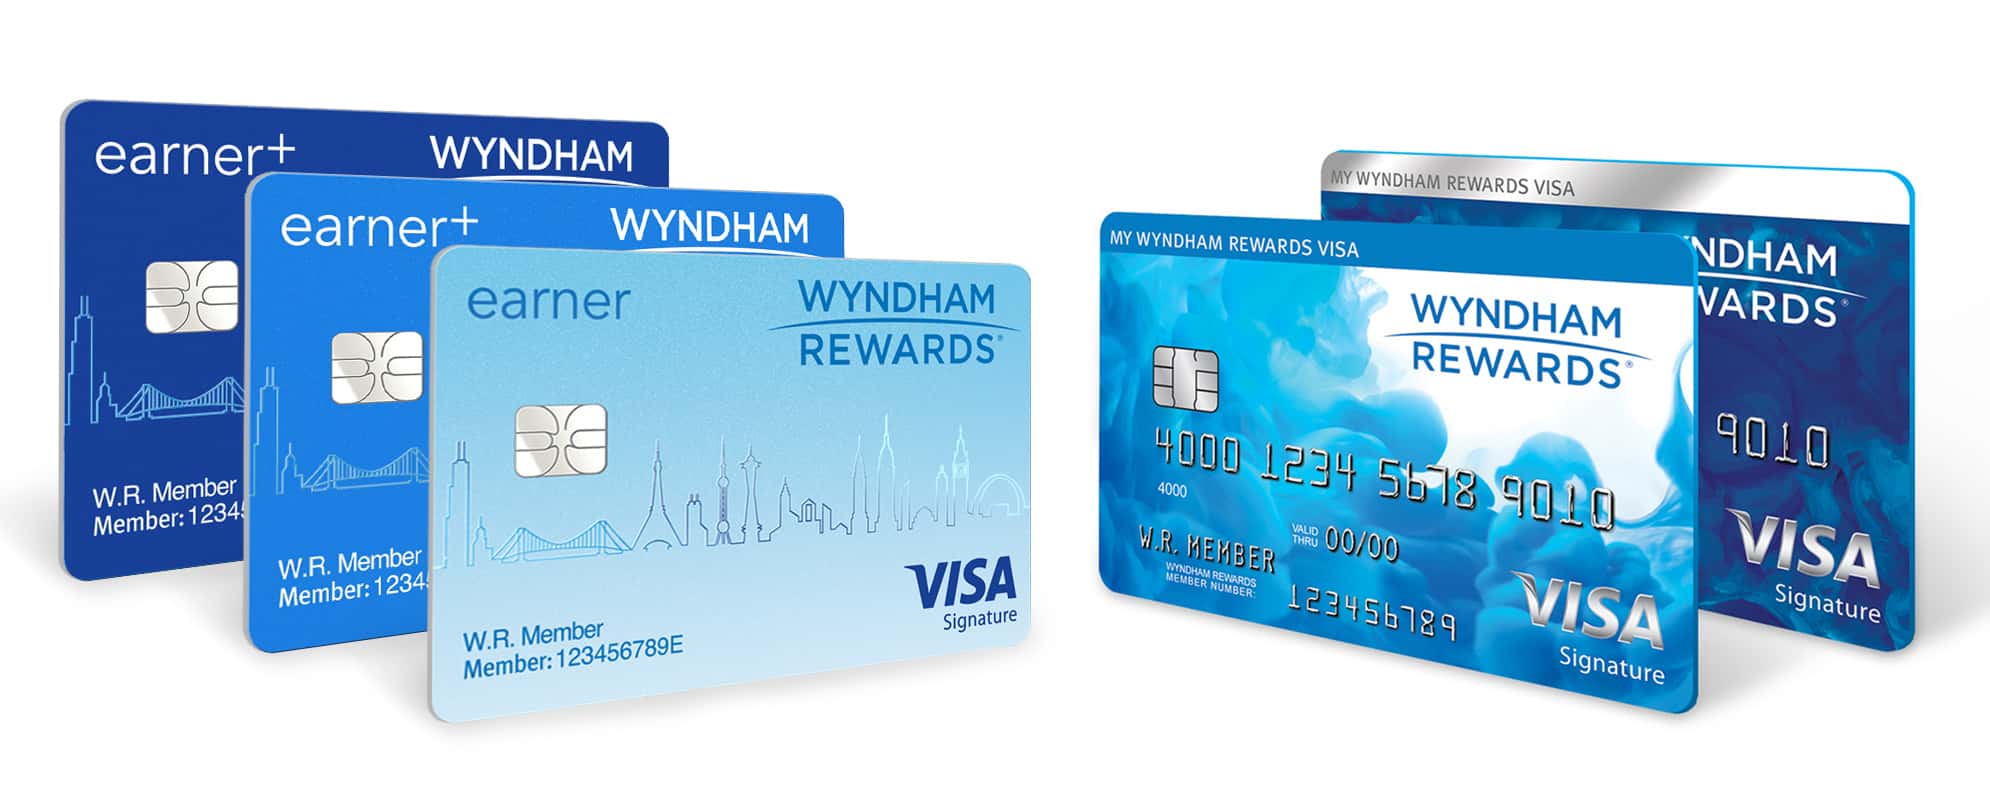 The Wyndham Rewards Visa credit cards.